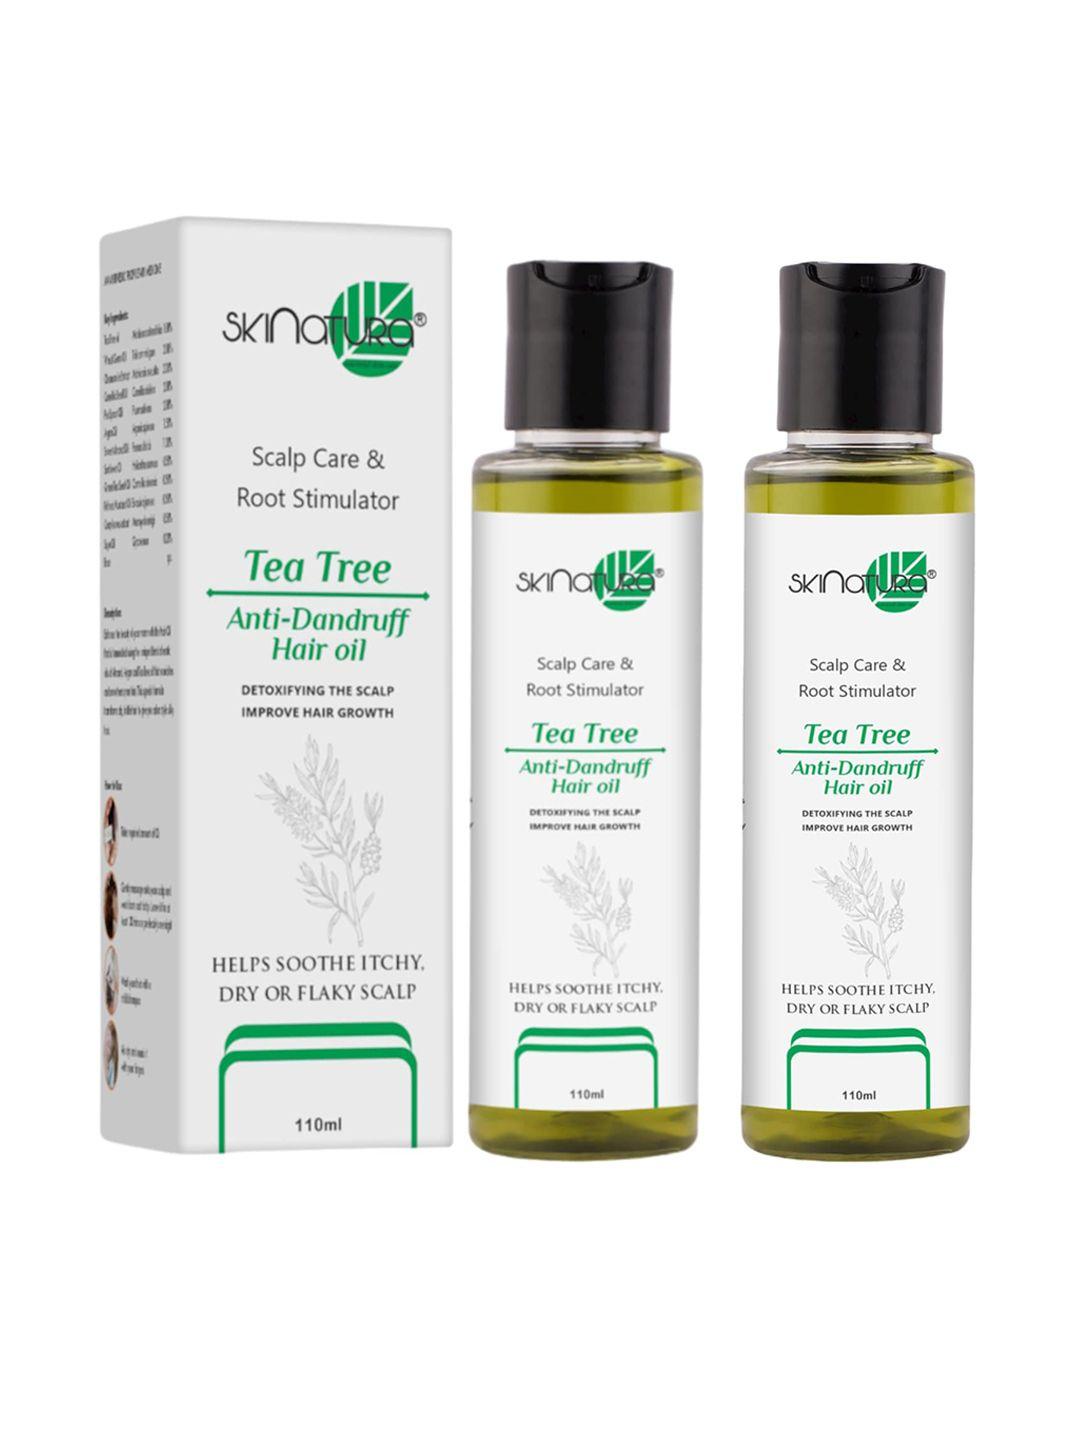 skinatura set of 2 tea tree anti-dandruff hair oil - 110ml each